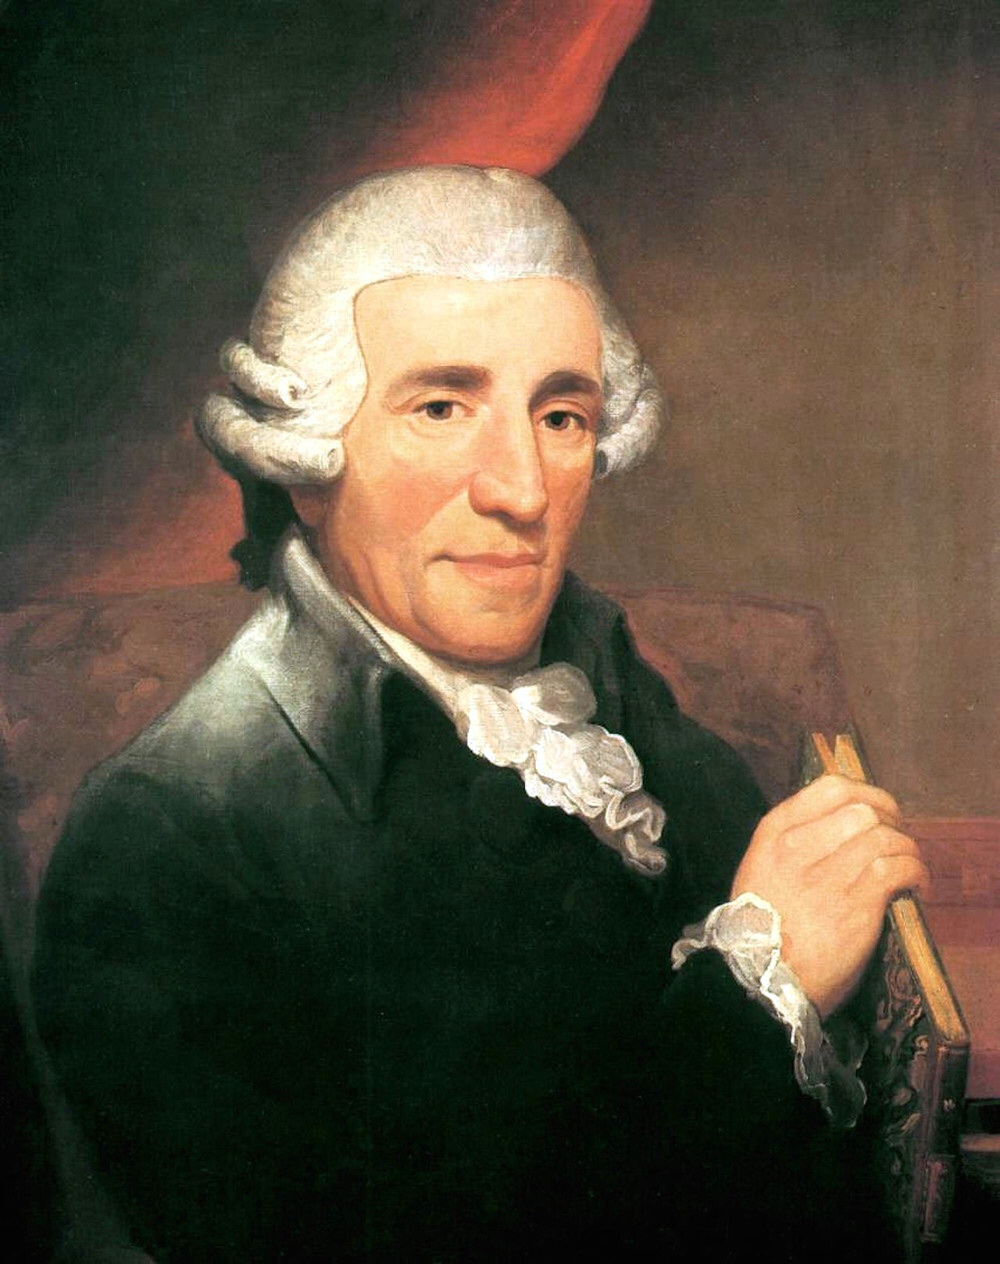 Joseph Haydn Image public domain